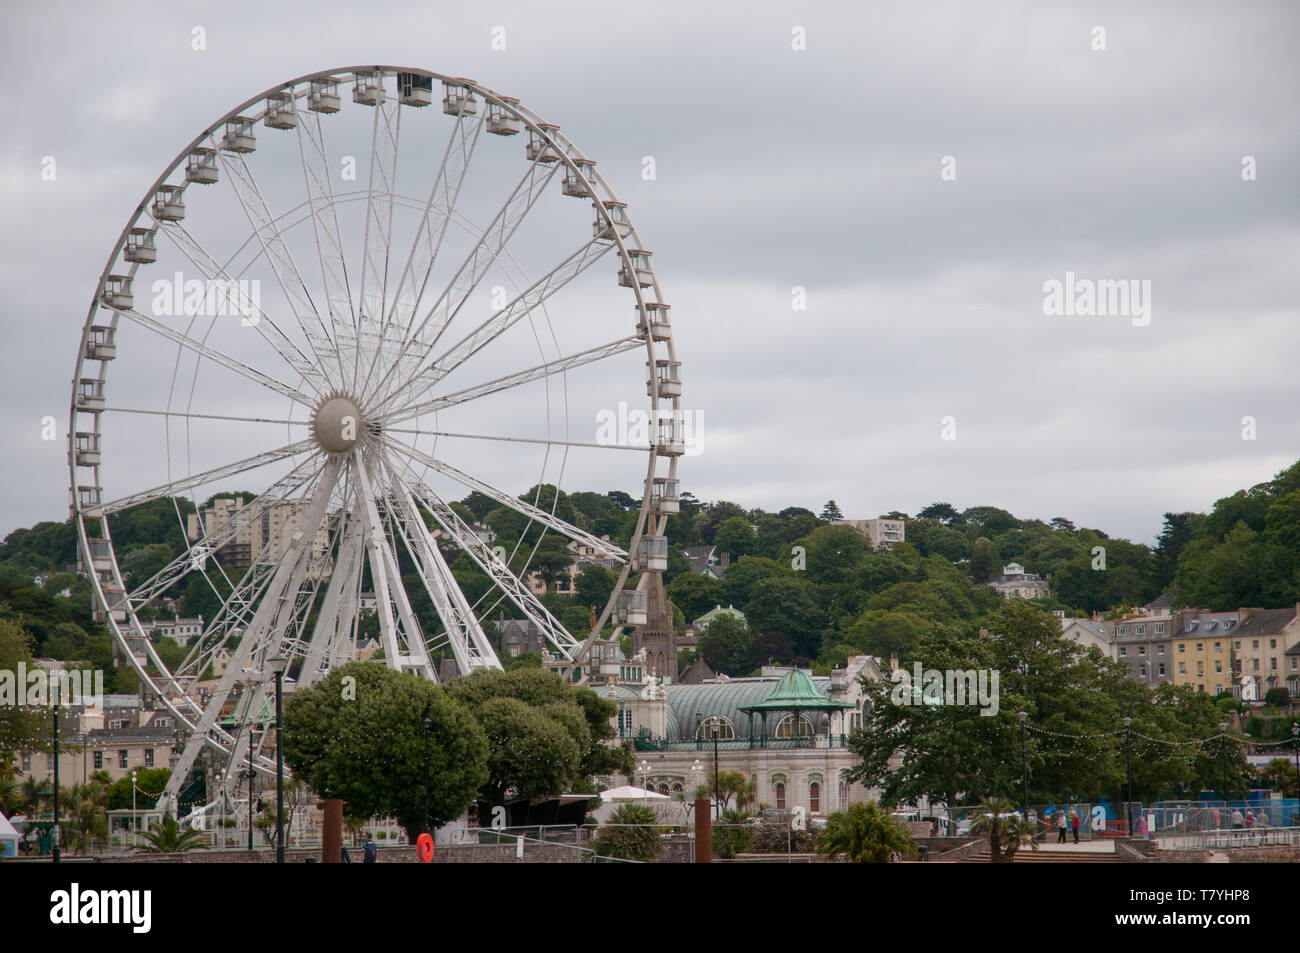 The English Riviera Wheel in Torquay, in 2013. Stock Photo